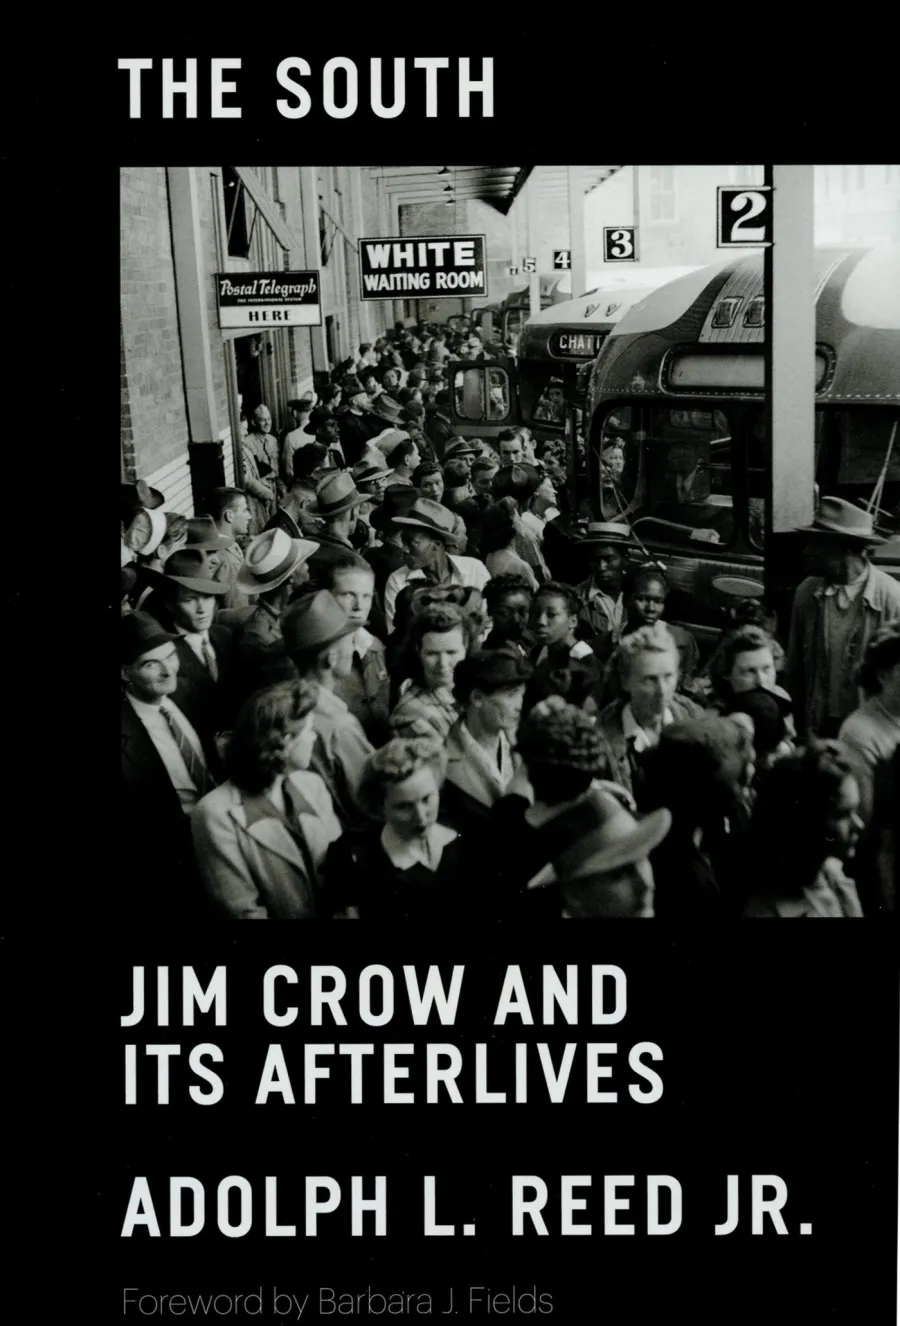 Living through Jim Crow